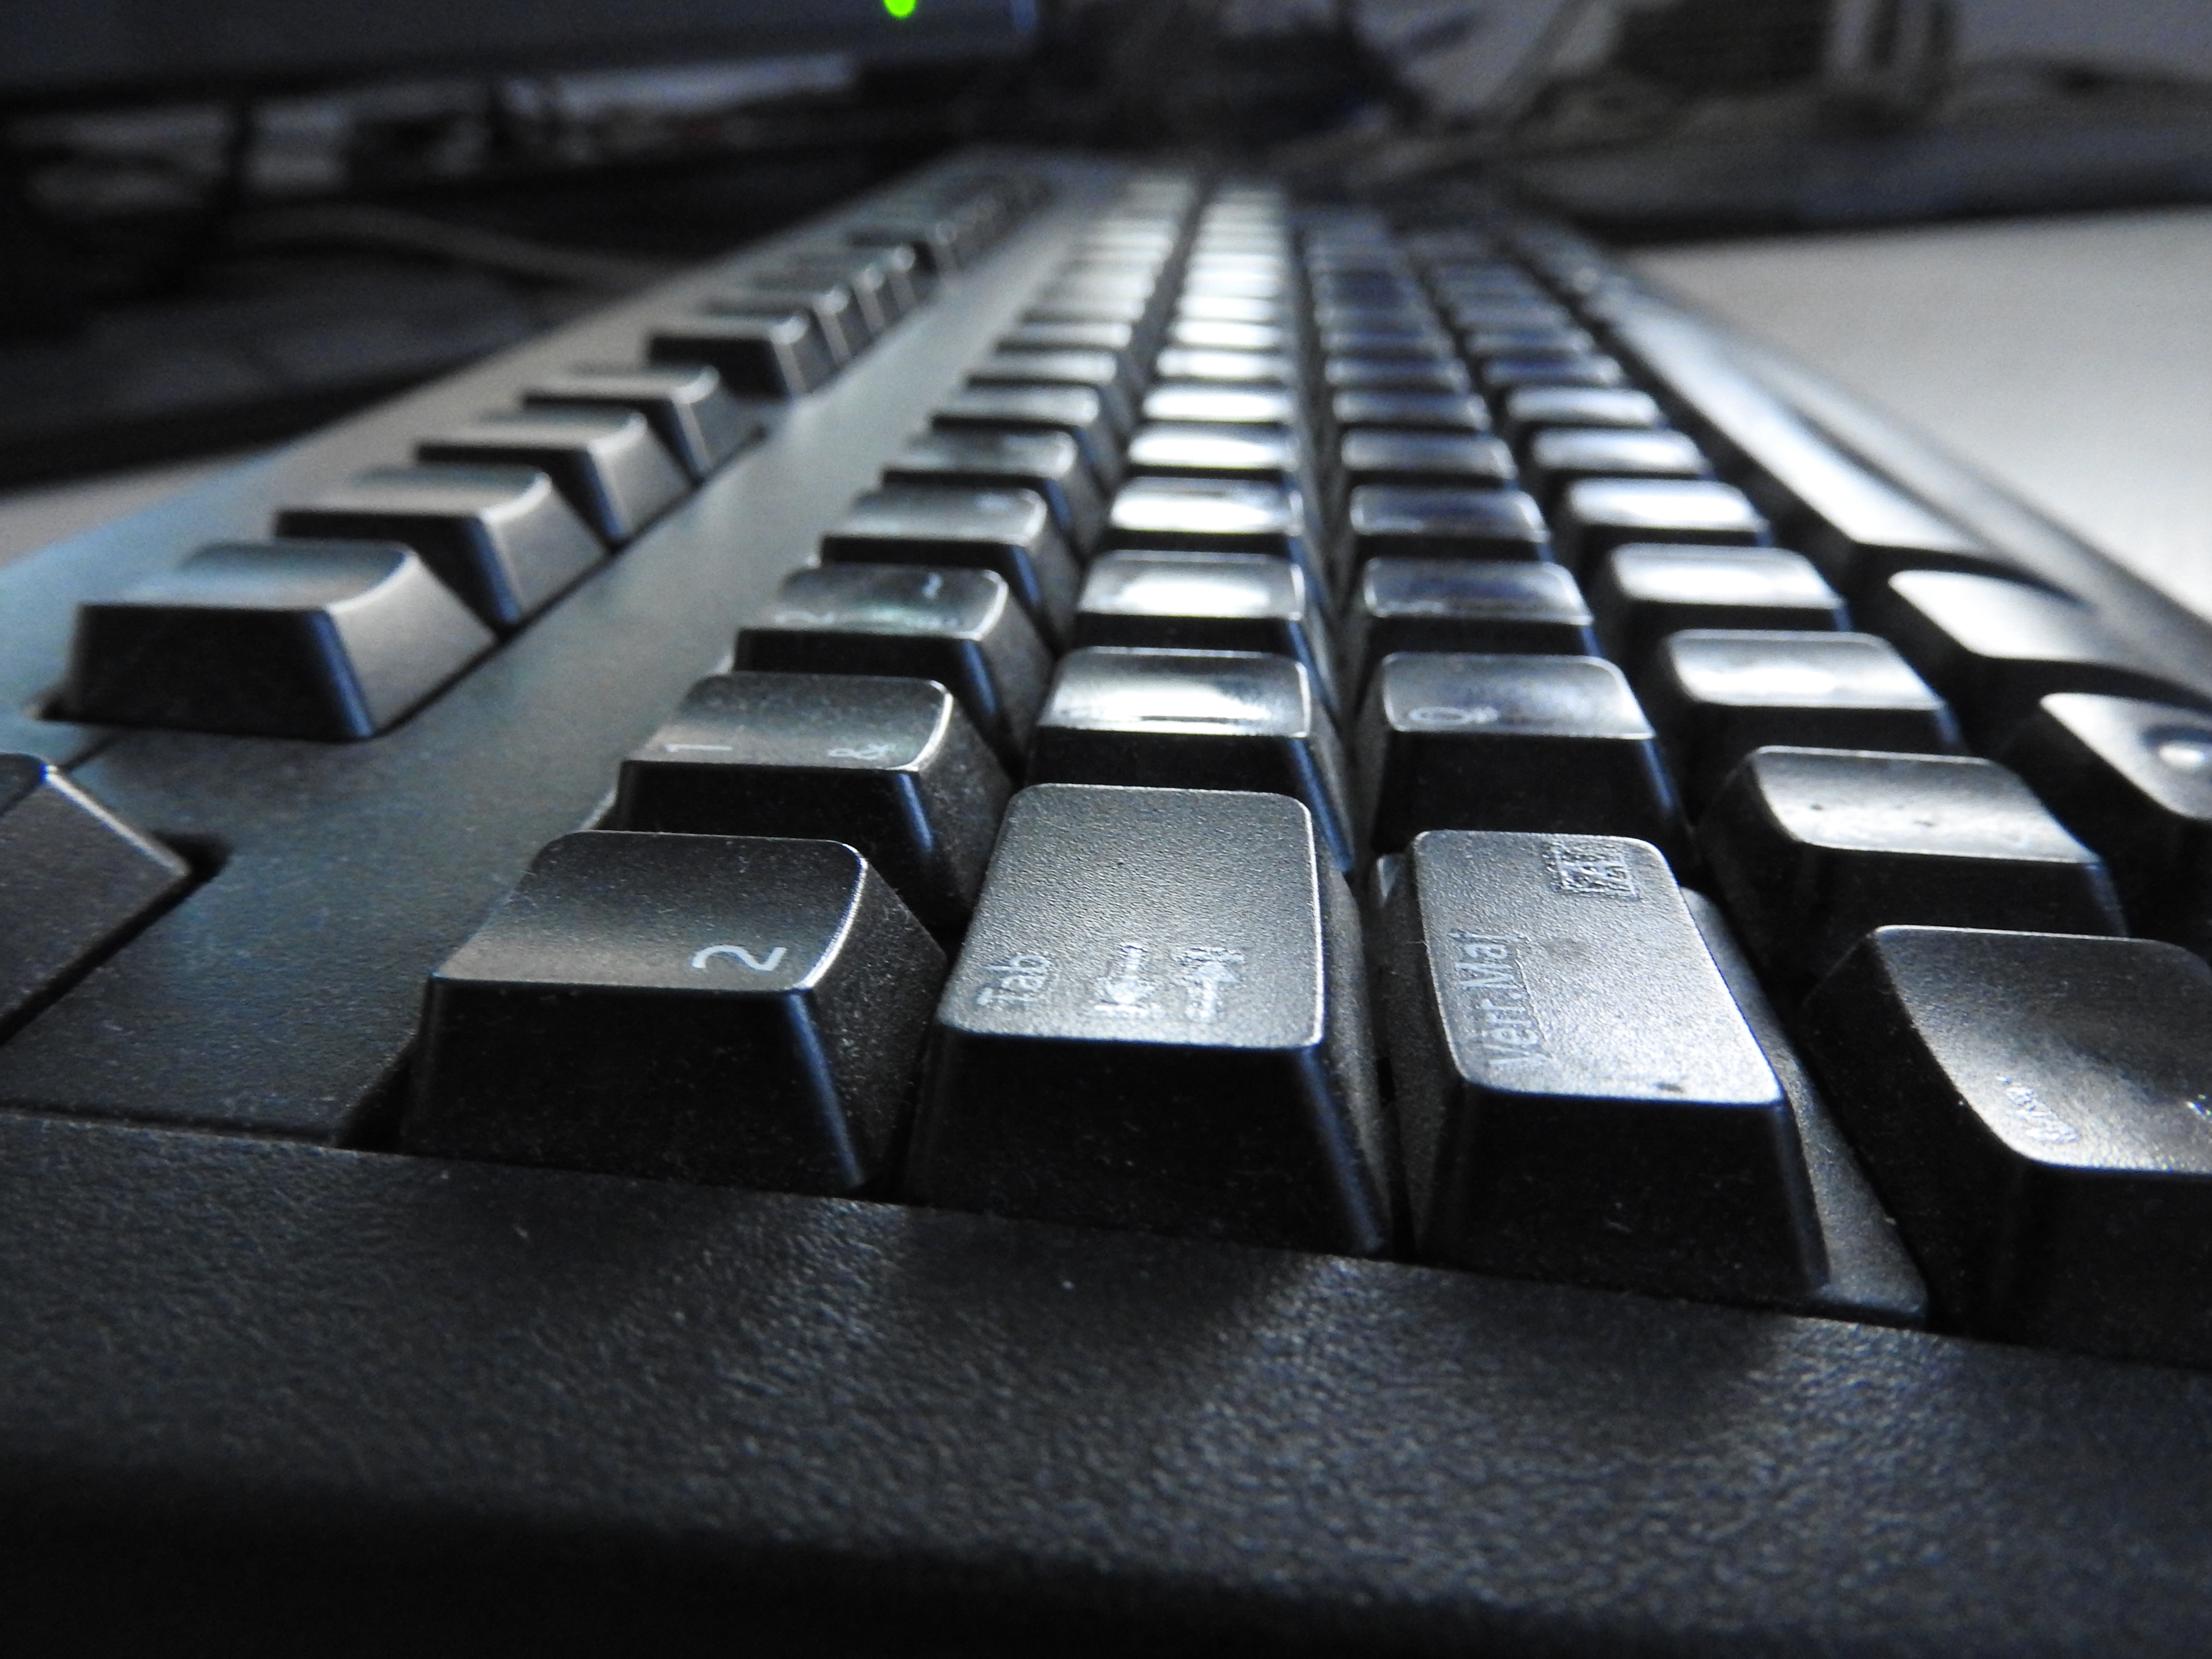 Close-up of a keyboard